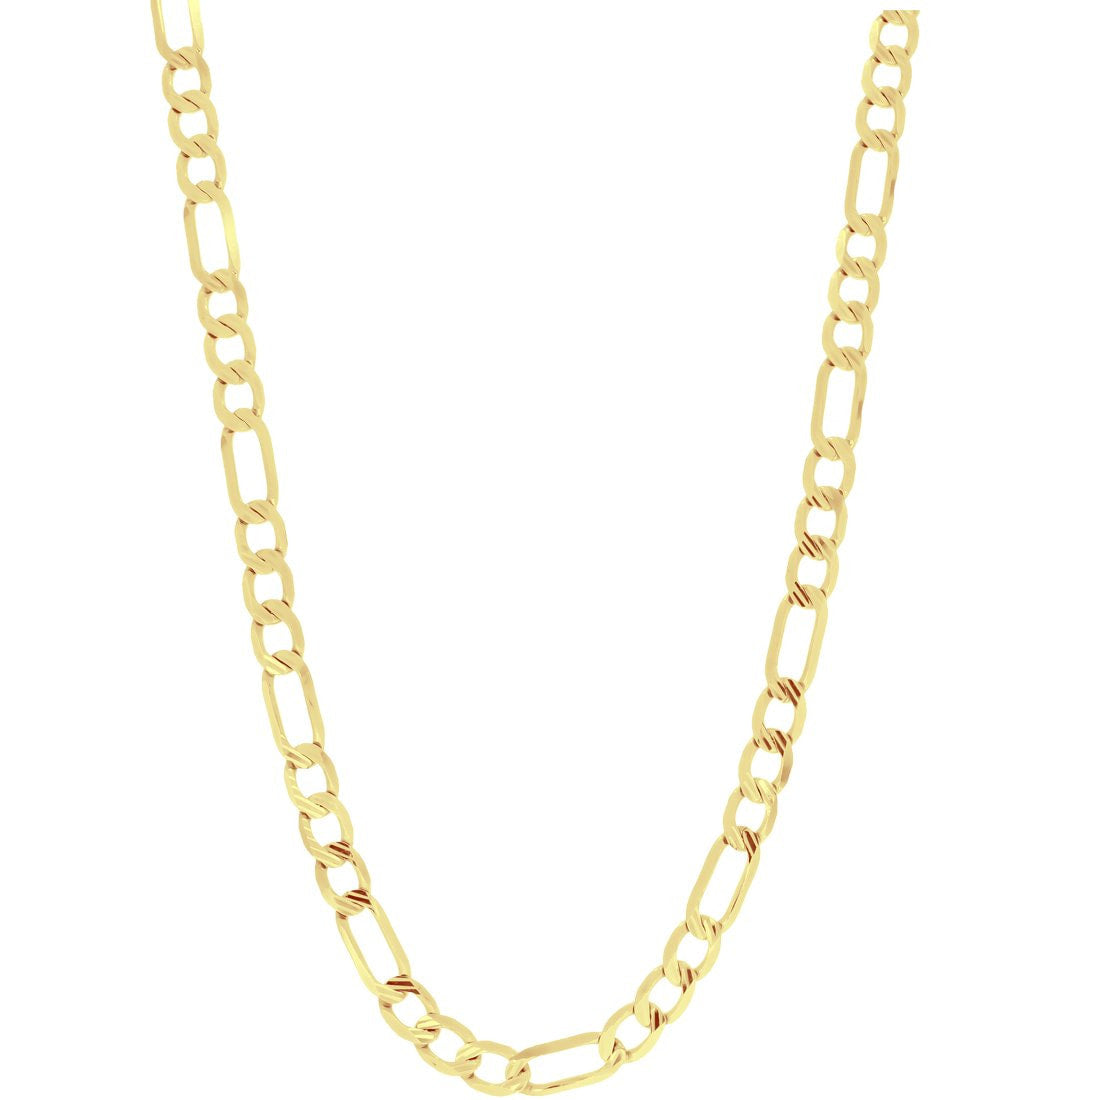 Cadena Oro 10k Cartie Diamantada 65 cm, Ancho 6 mm | Joyas